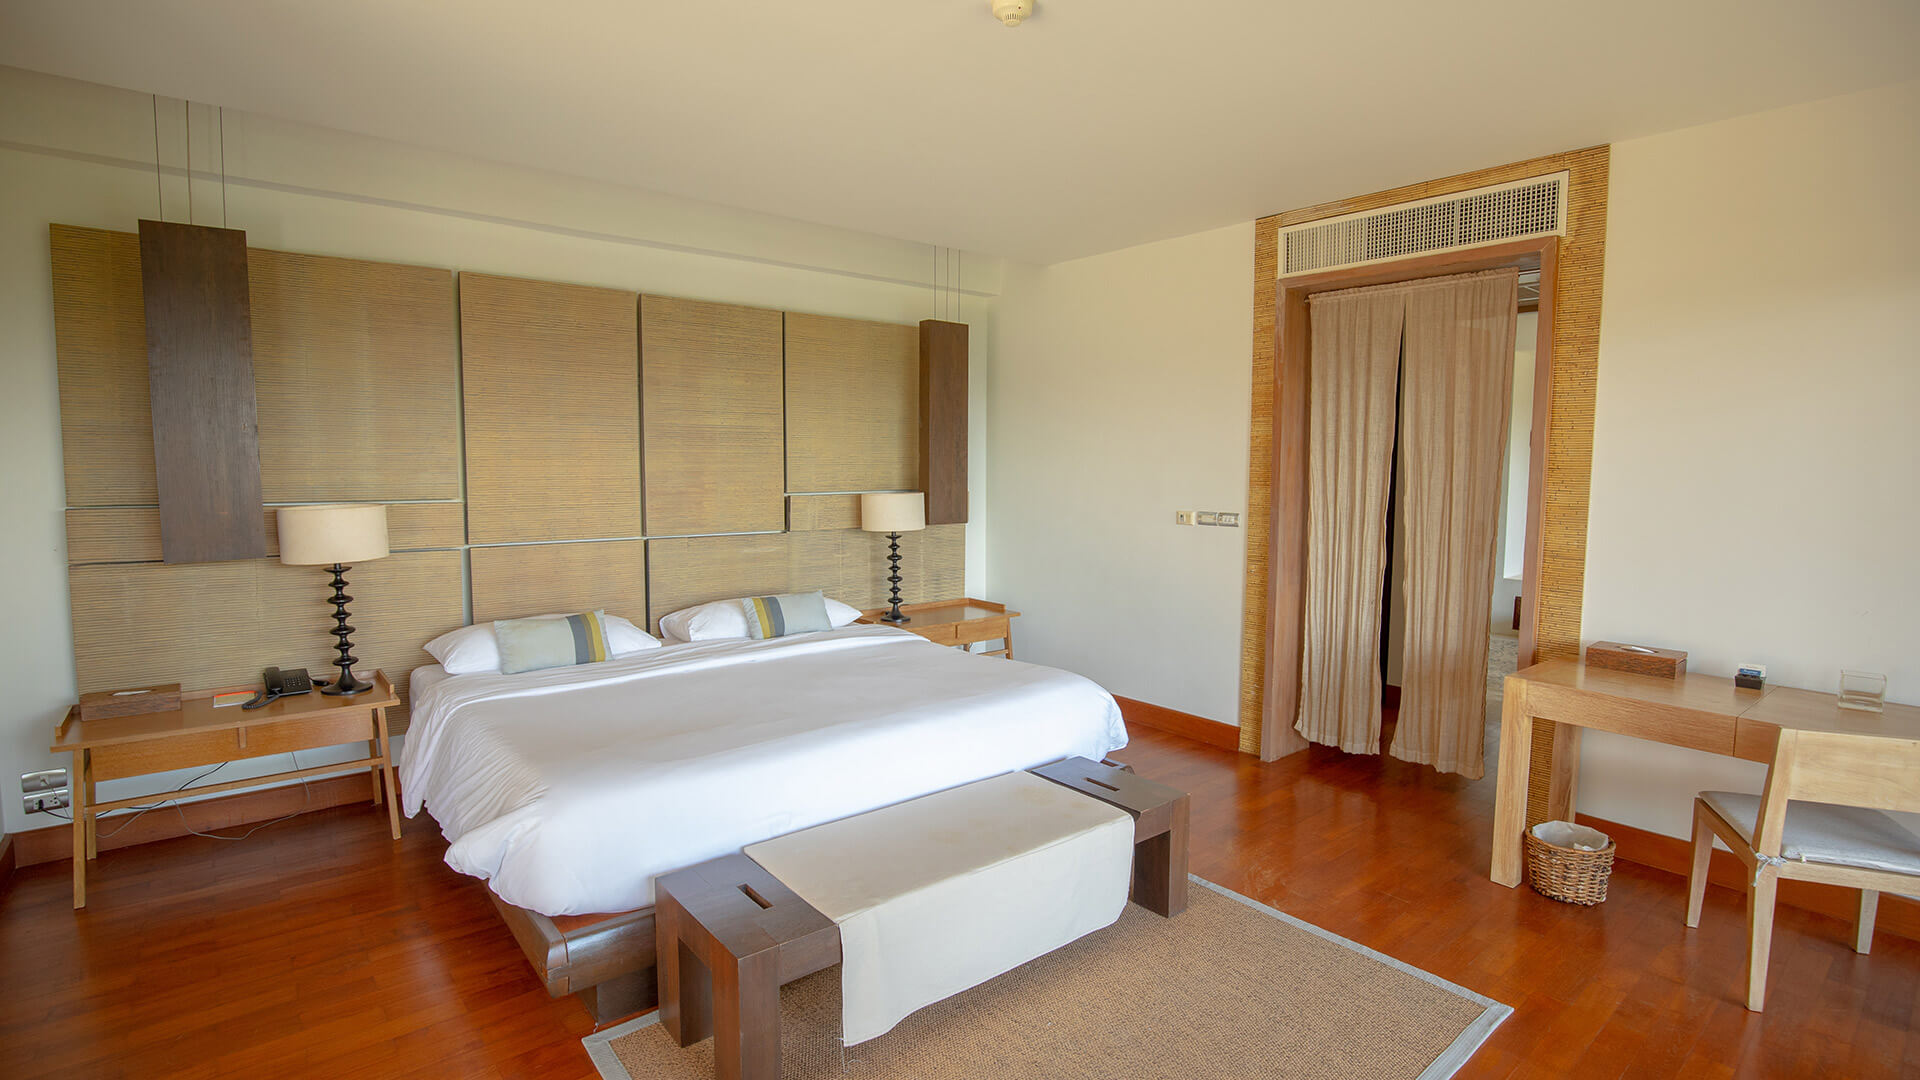 3 bedroom residence villa partial ocean pool view luxury hotel resort phuket thailand